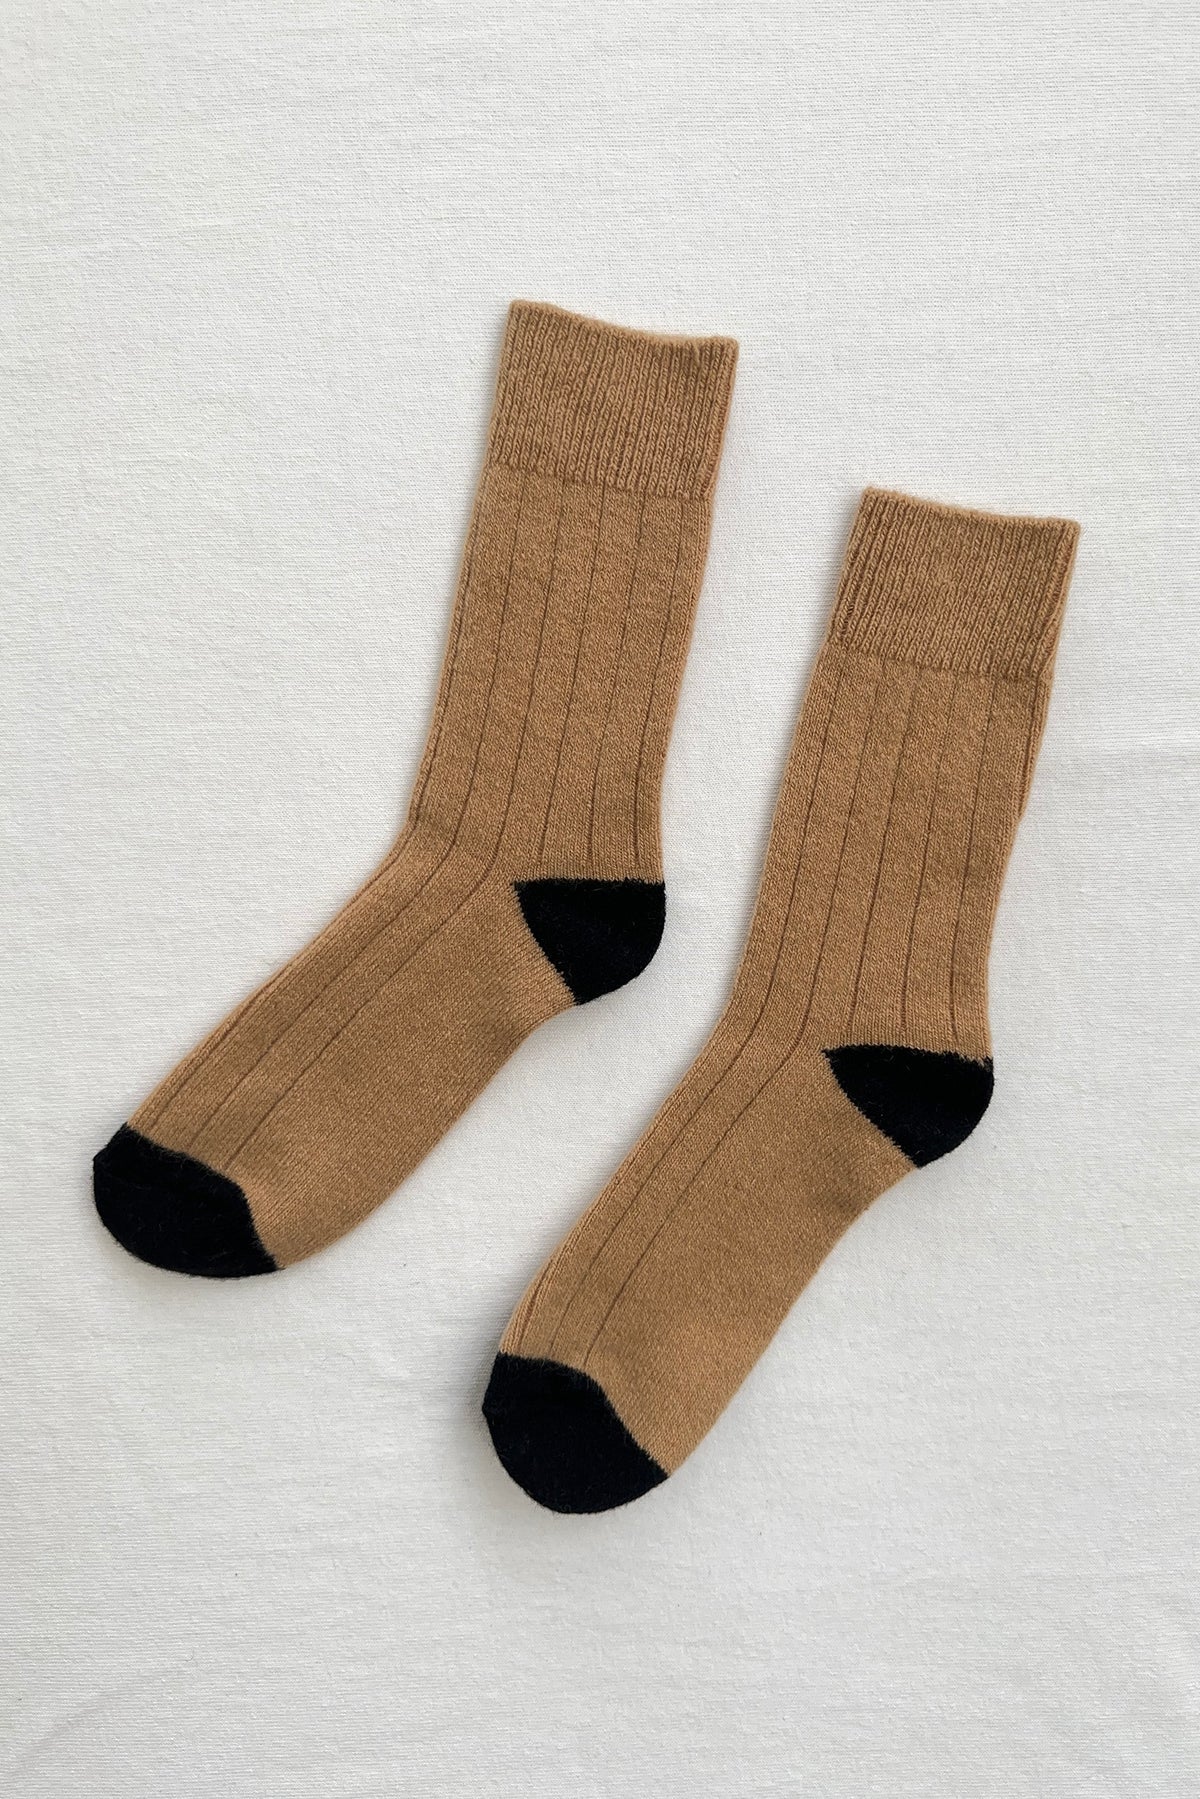 Le Bon Shoppe classic cashmere socks camel tan | Pipe and Row Seattle